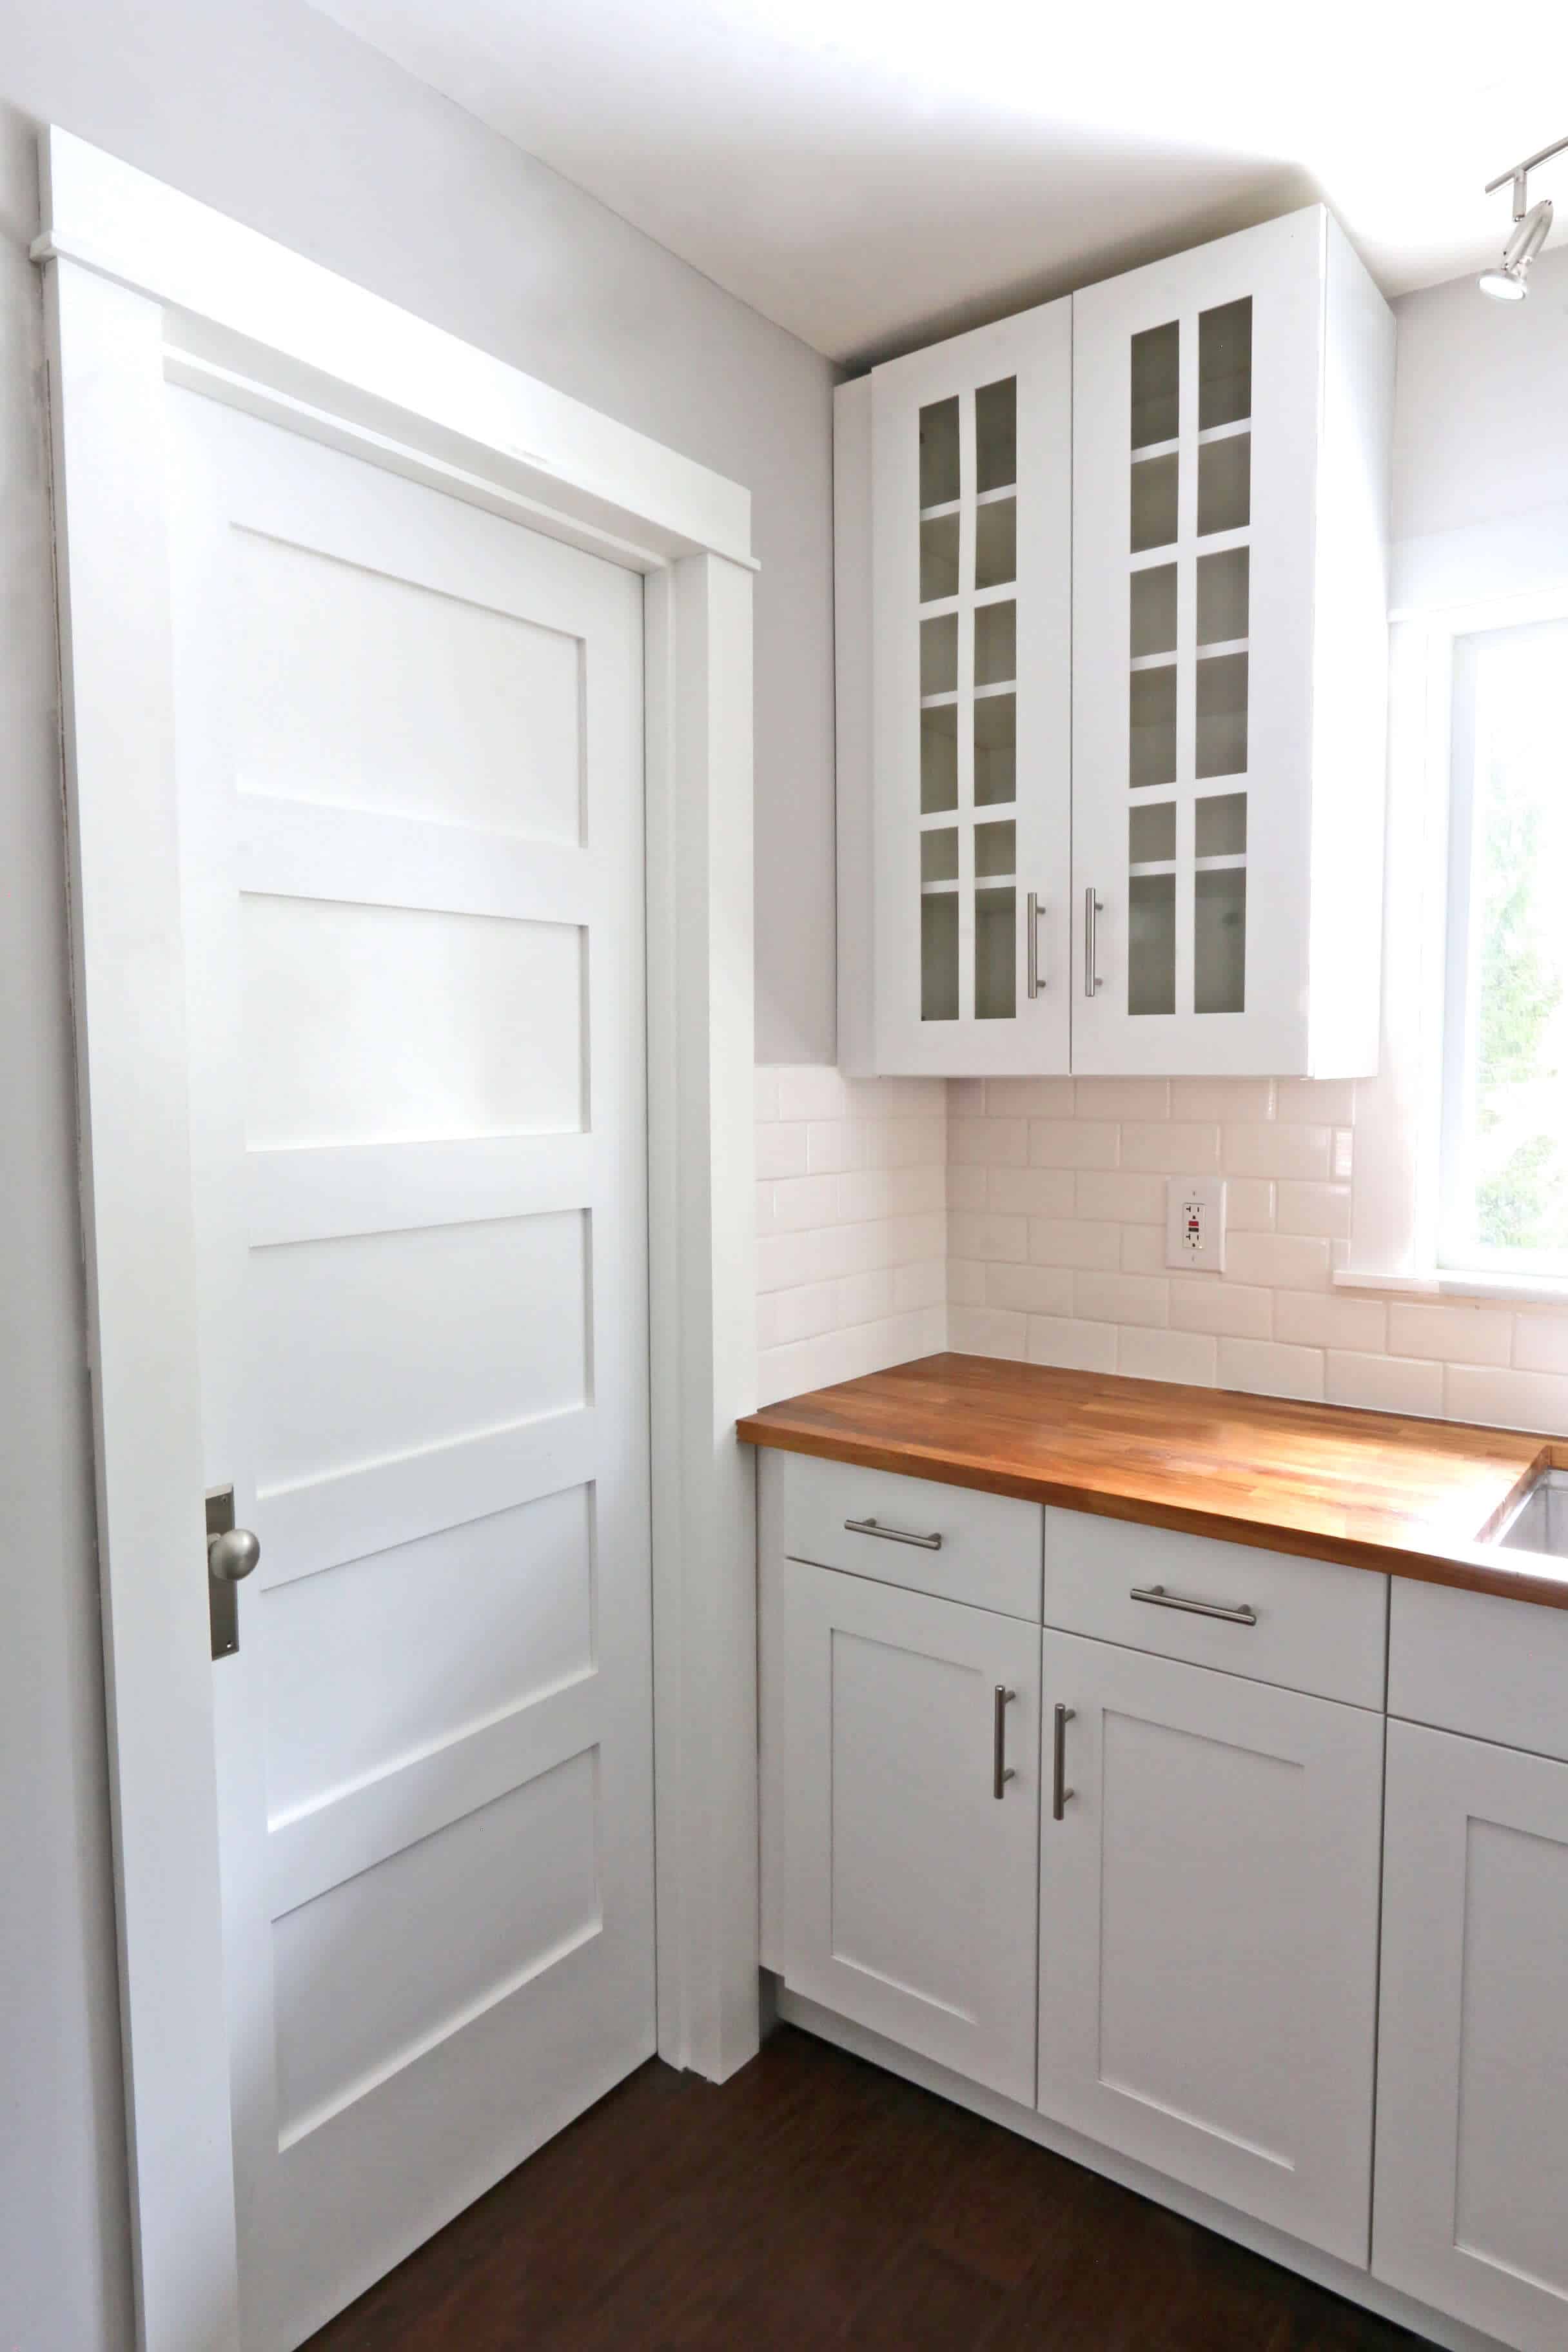 bellmont kitchen cabinets review remodel renovation diy atg stores